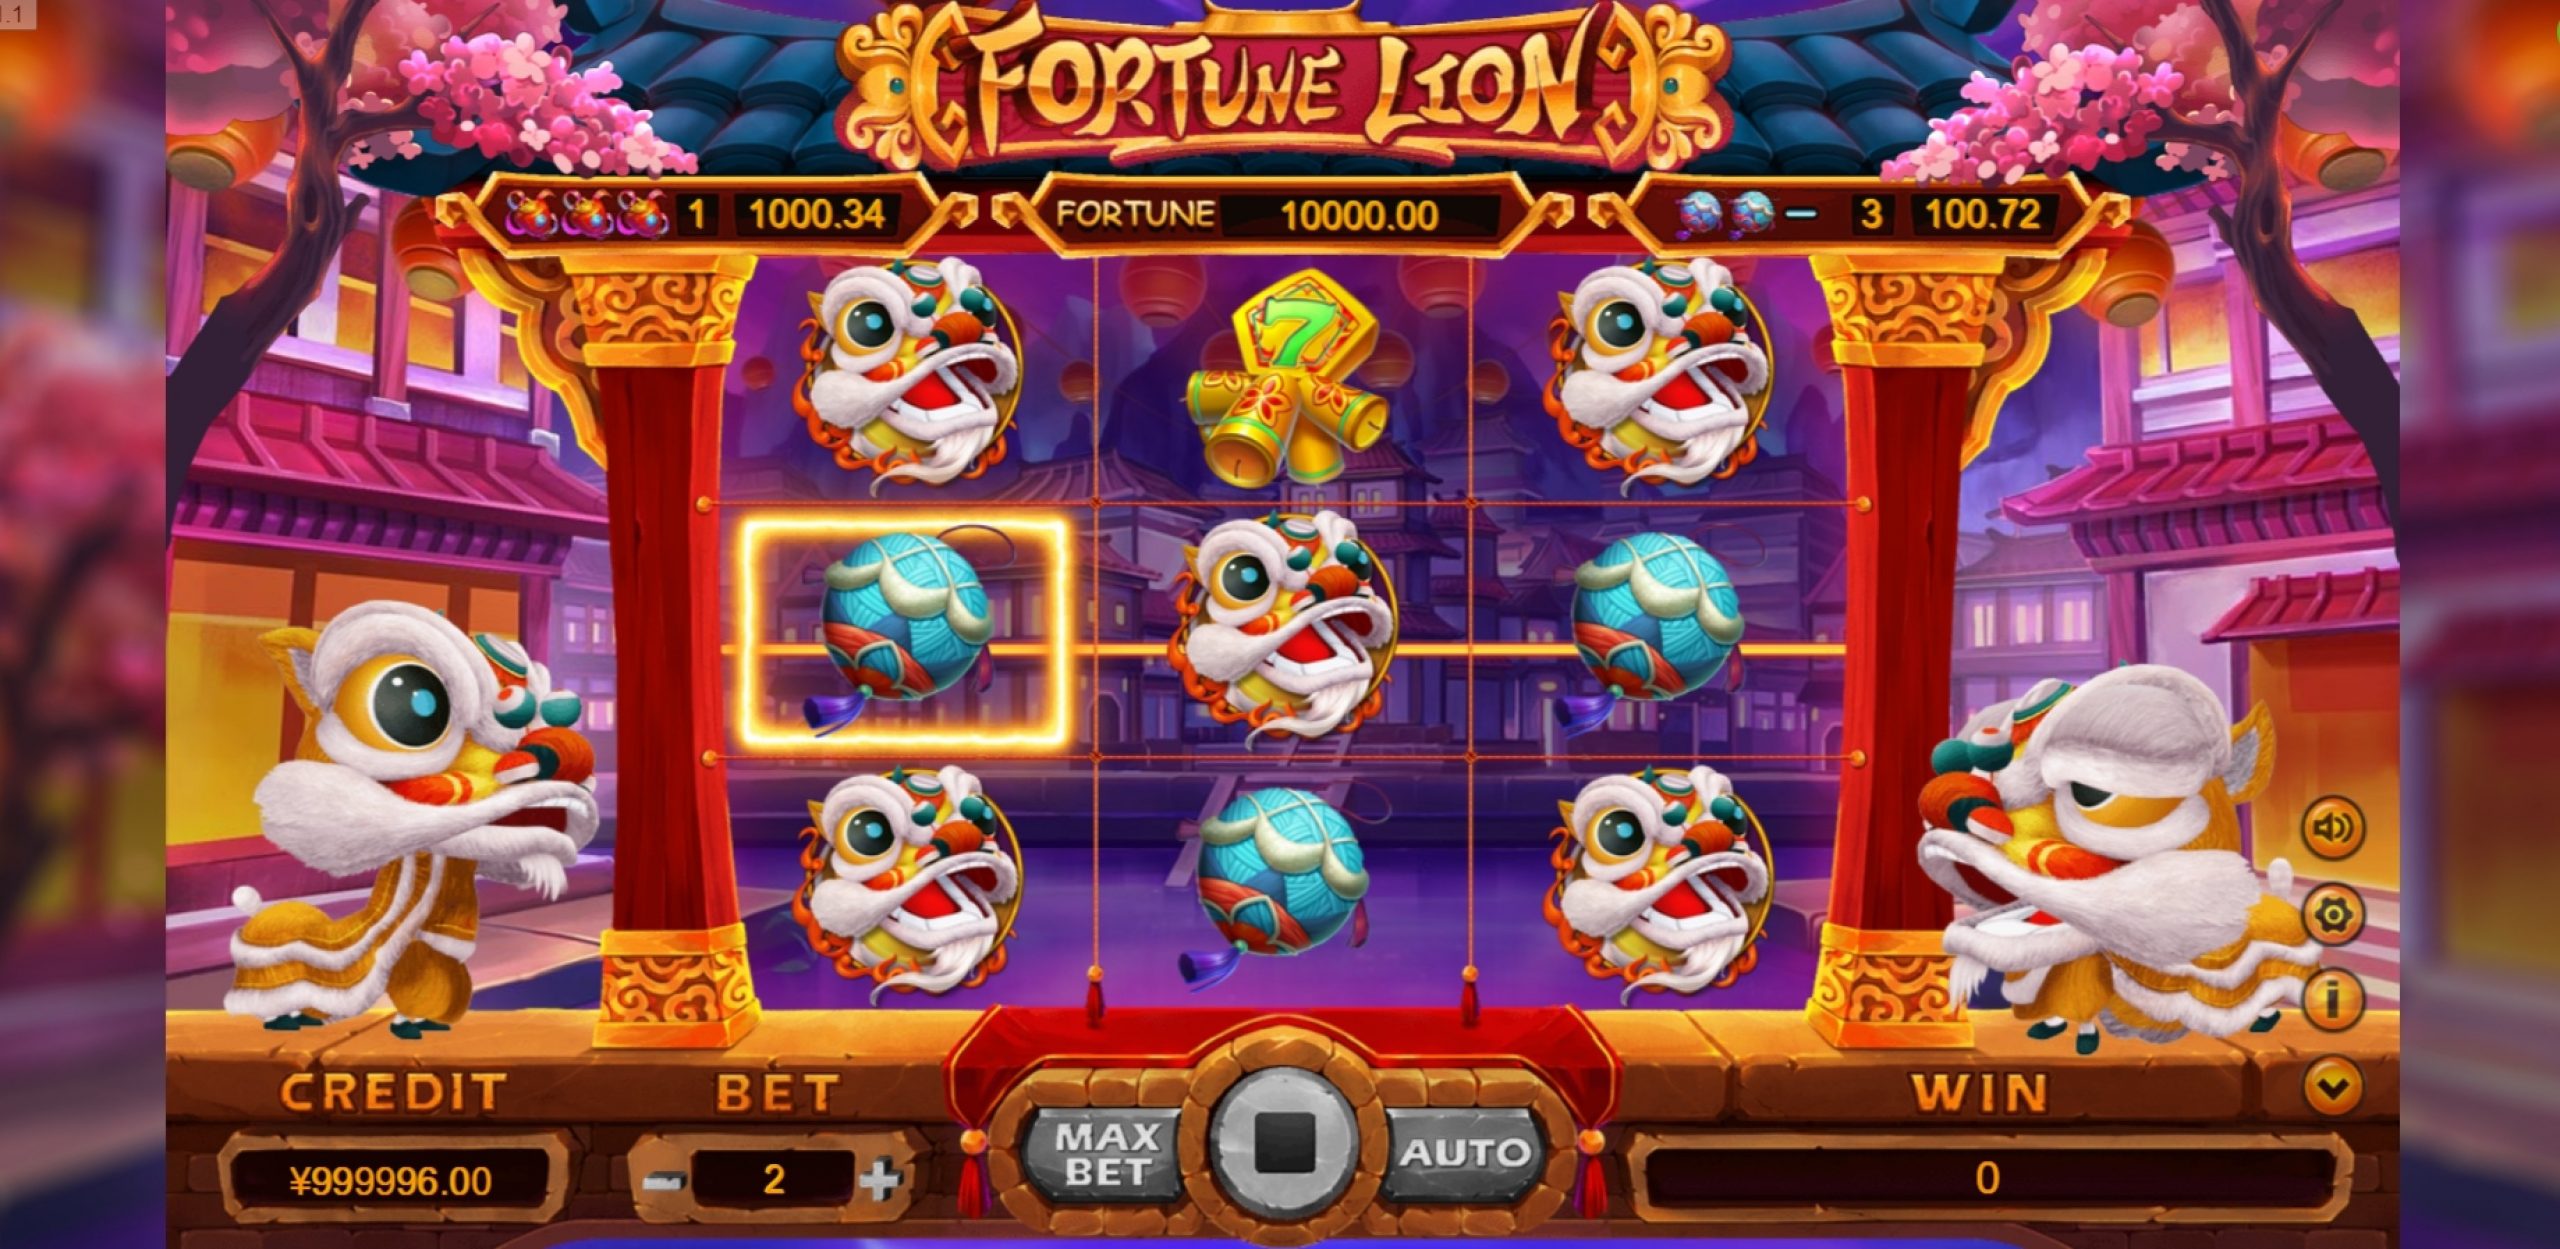 Fortune Lion